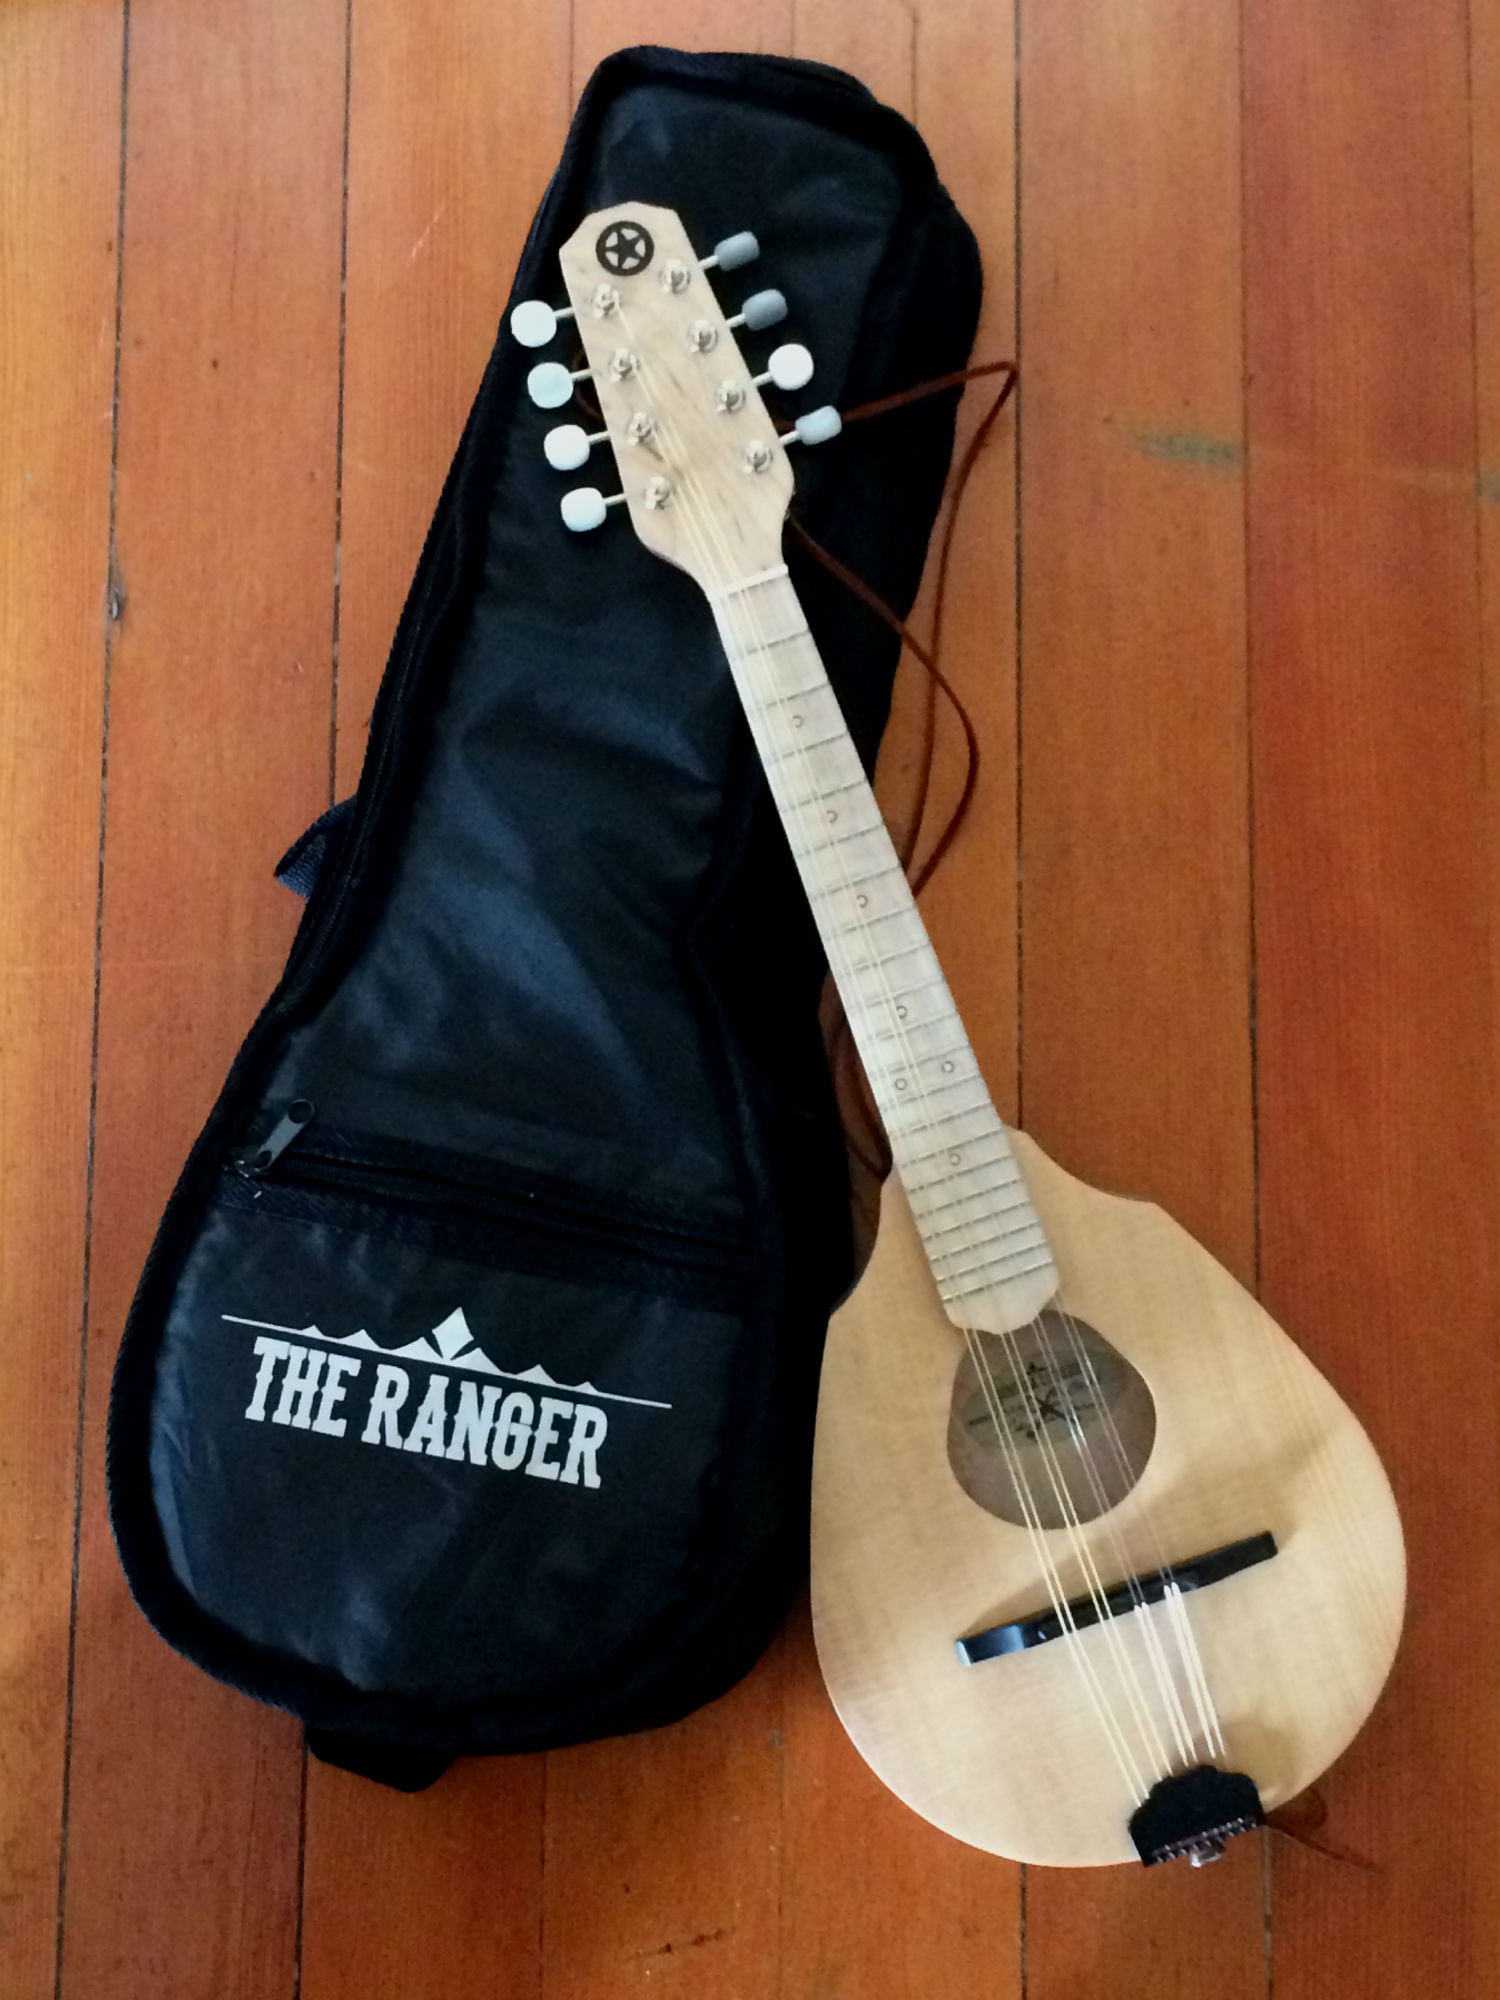 used travel mandolin